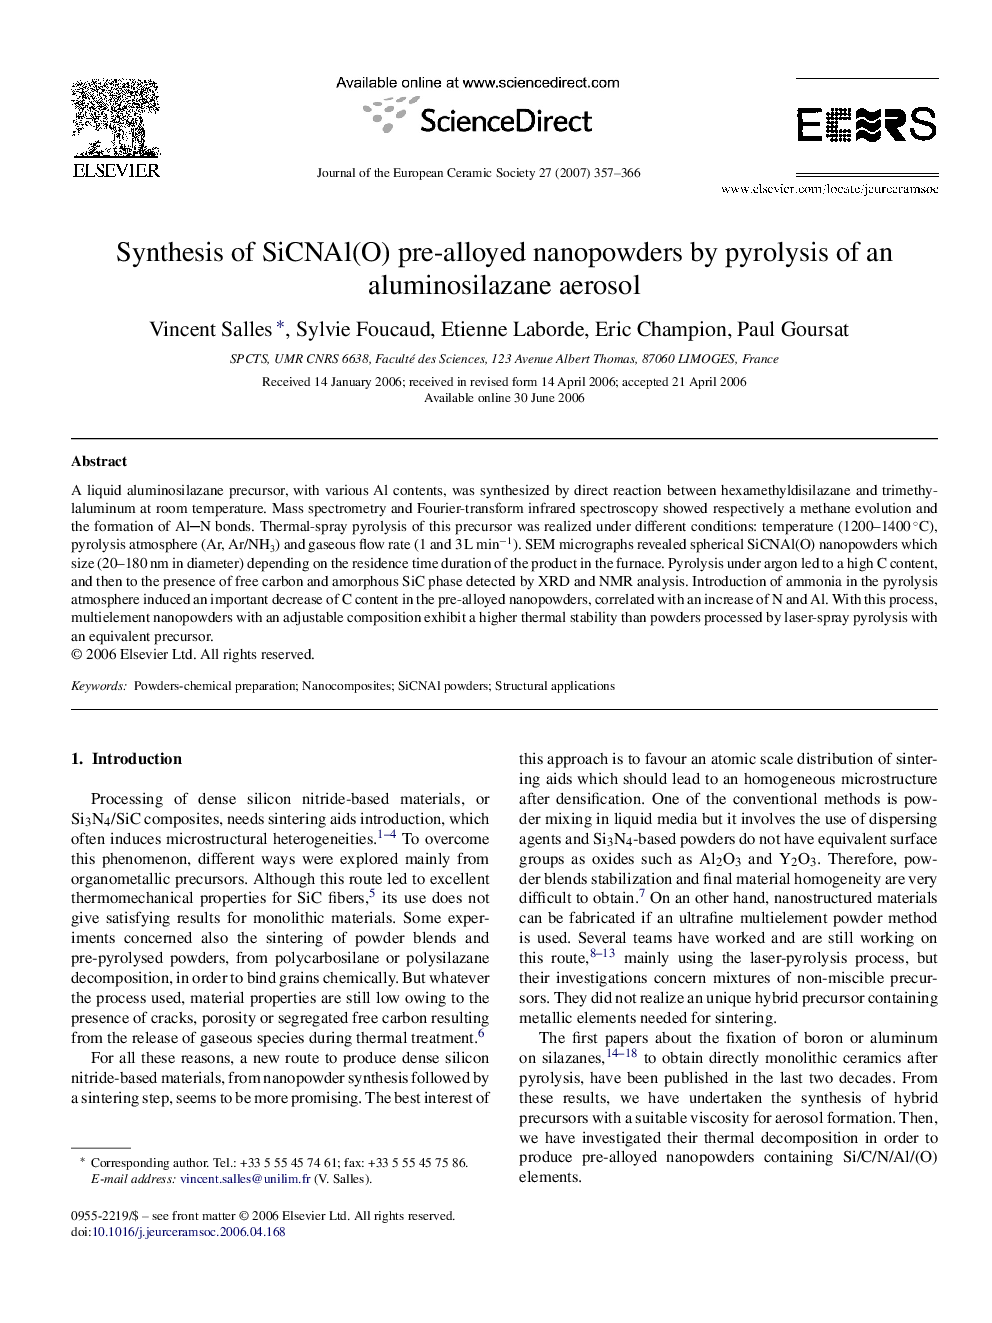 Synthesis of SiCNAl(O) pre-alloyed nanopowders by pyrolysis of an aluminosilazane aerosol